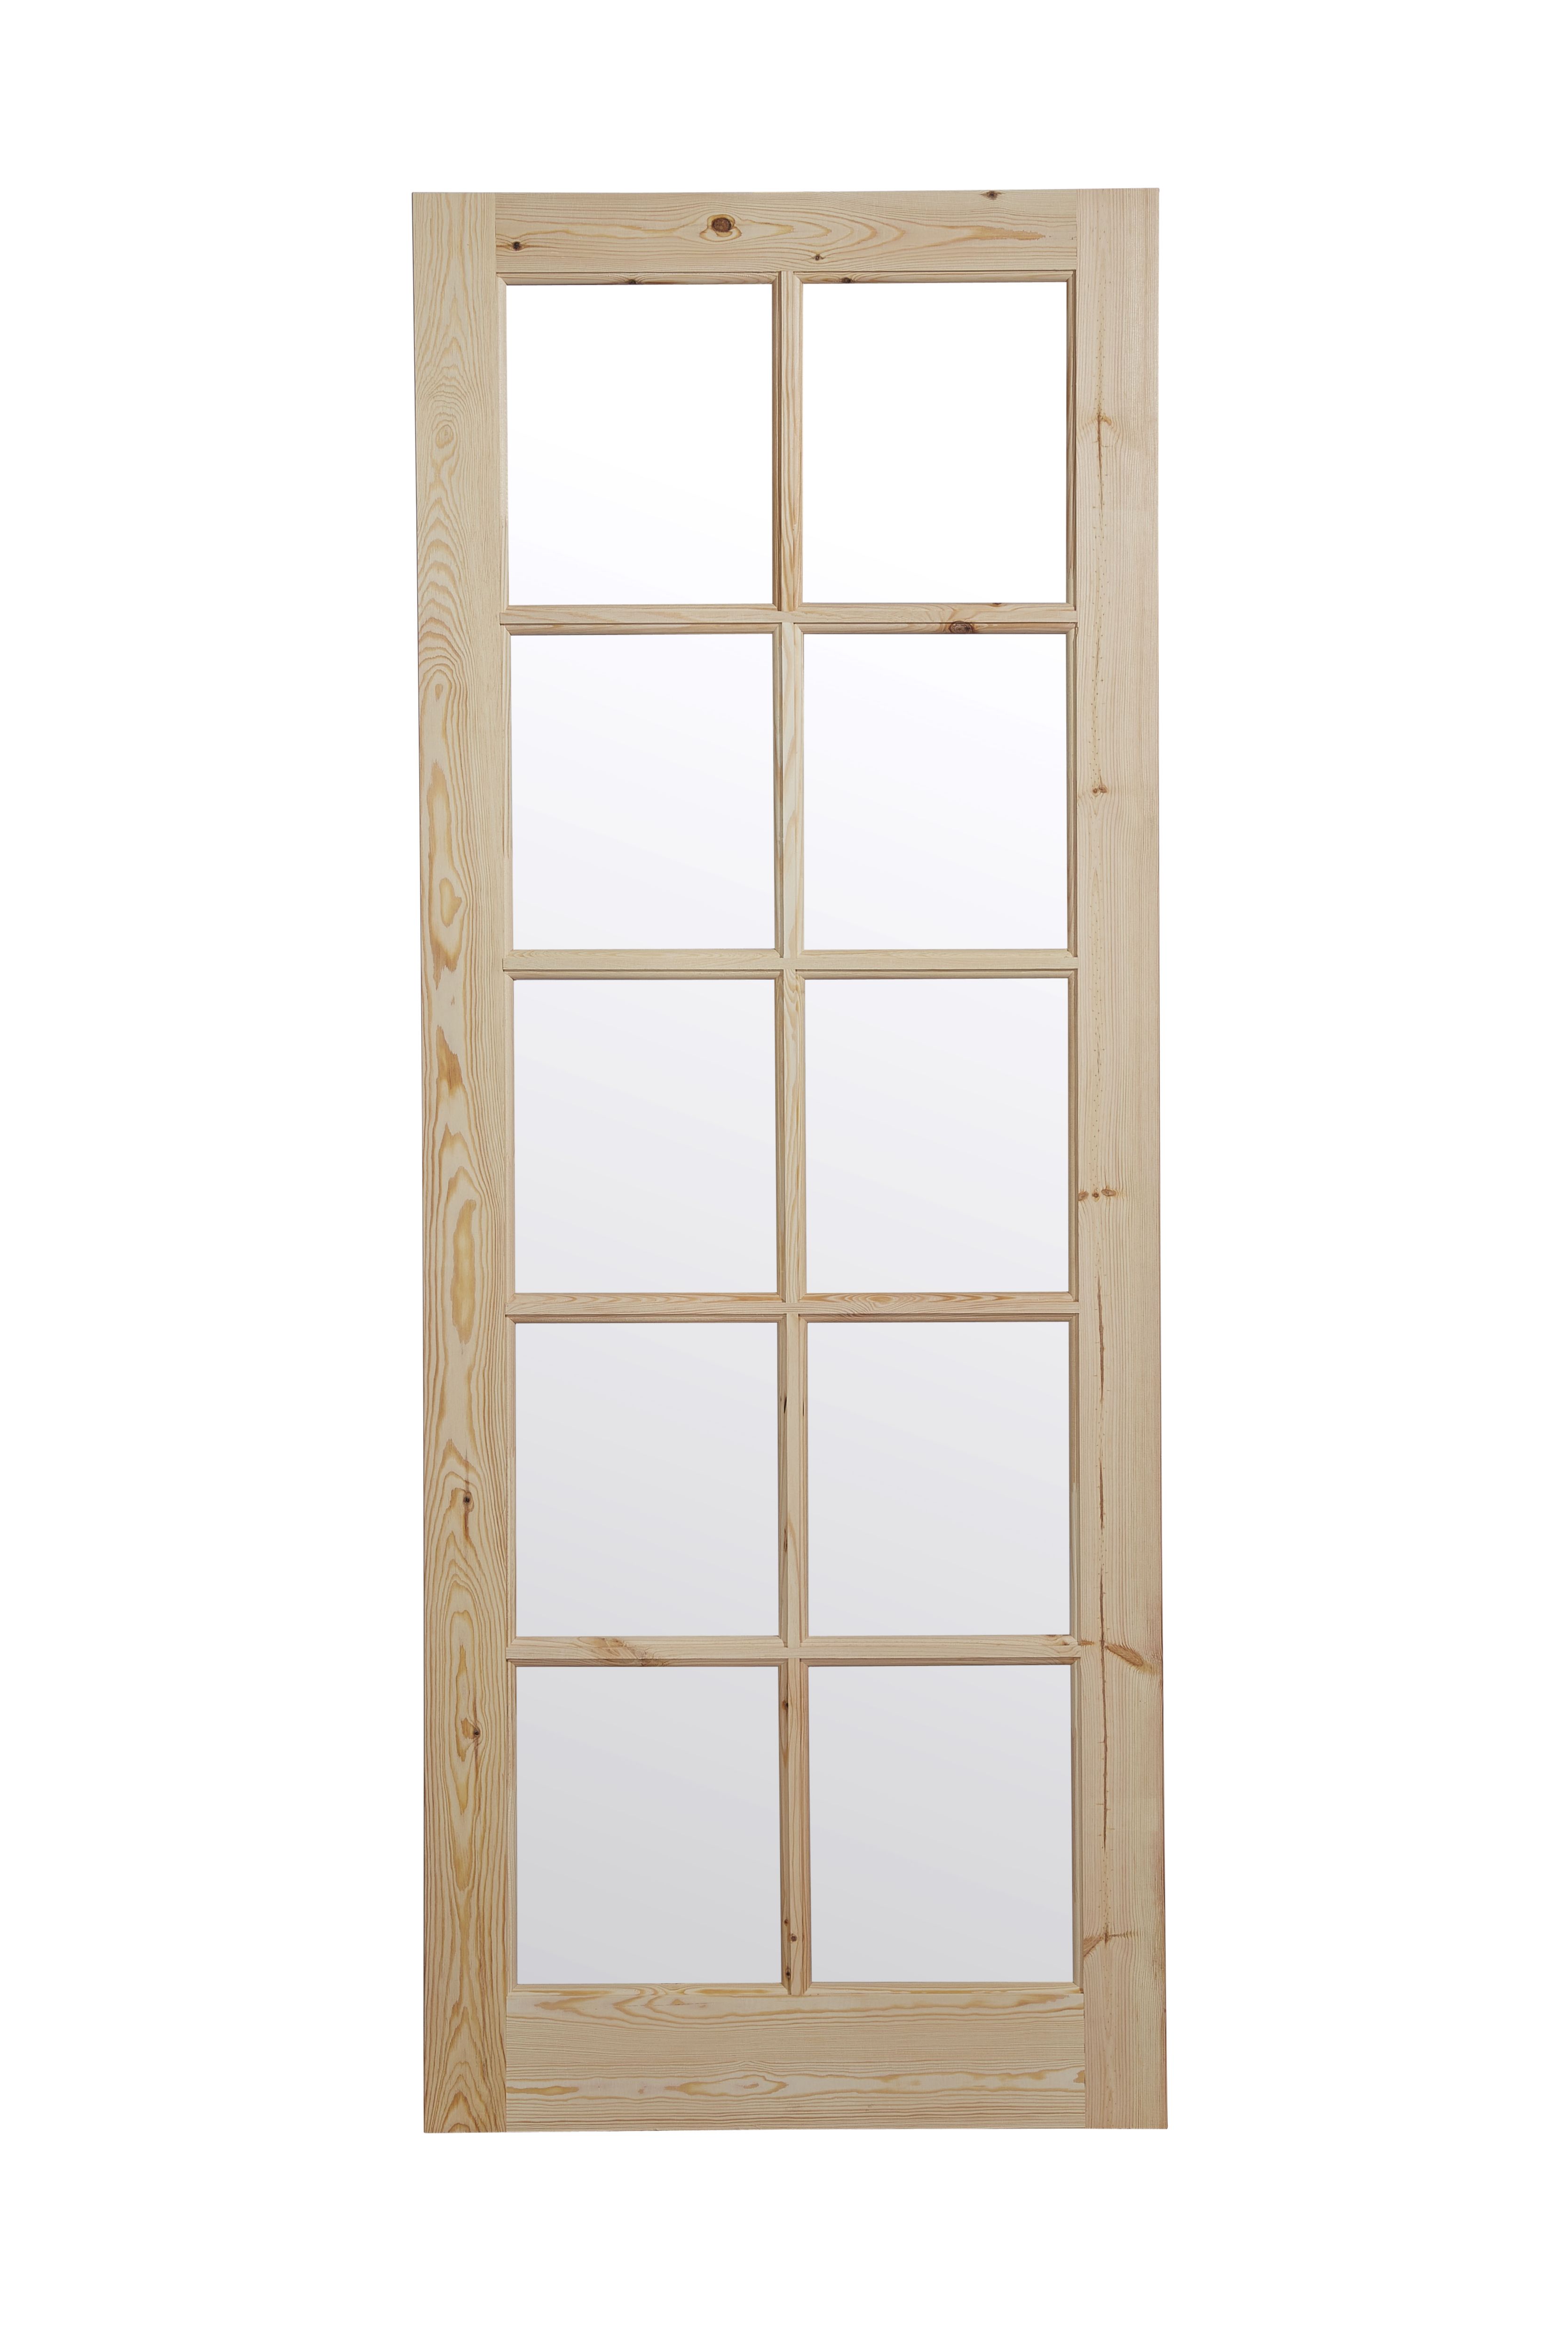 Geom 10 panel 10 Lite Clear Glazed Traditional Internal Knotty pine Door, (H)1981mm (W)686mm (T)35mm